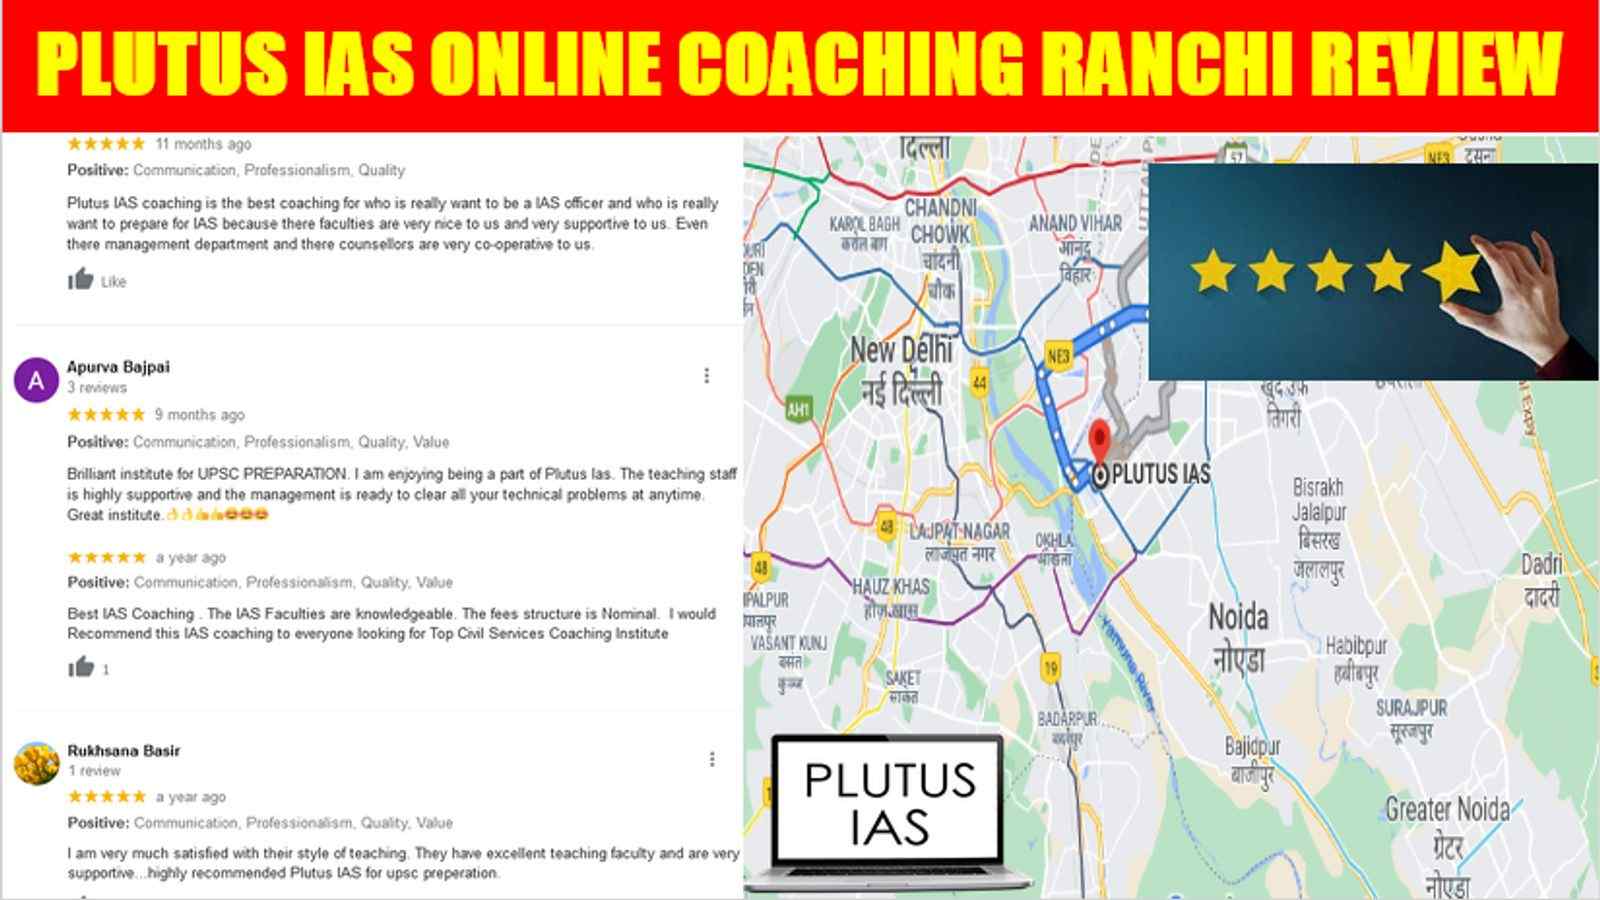 Plutus IAS Online Coaching Ranchi Review